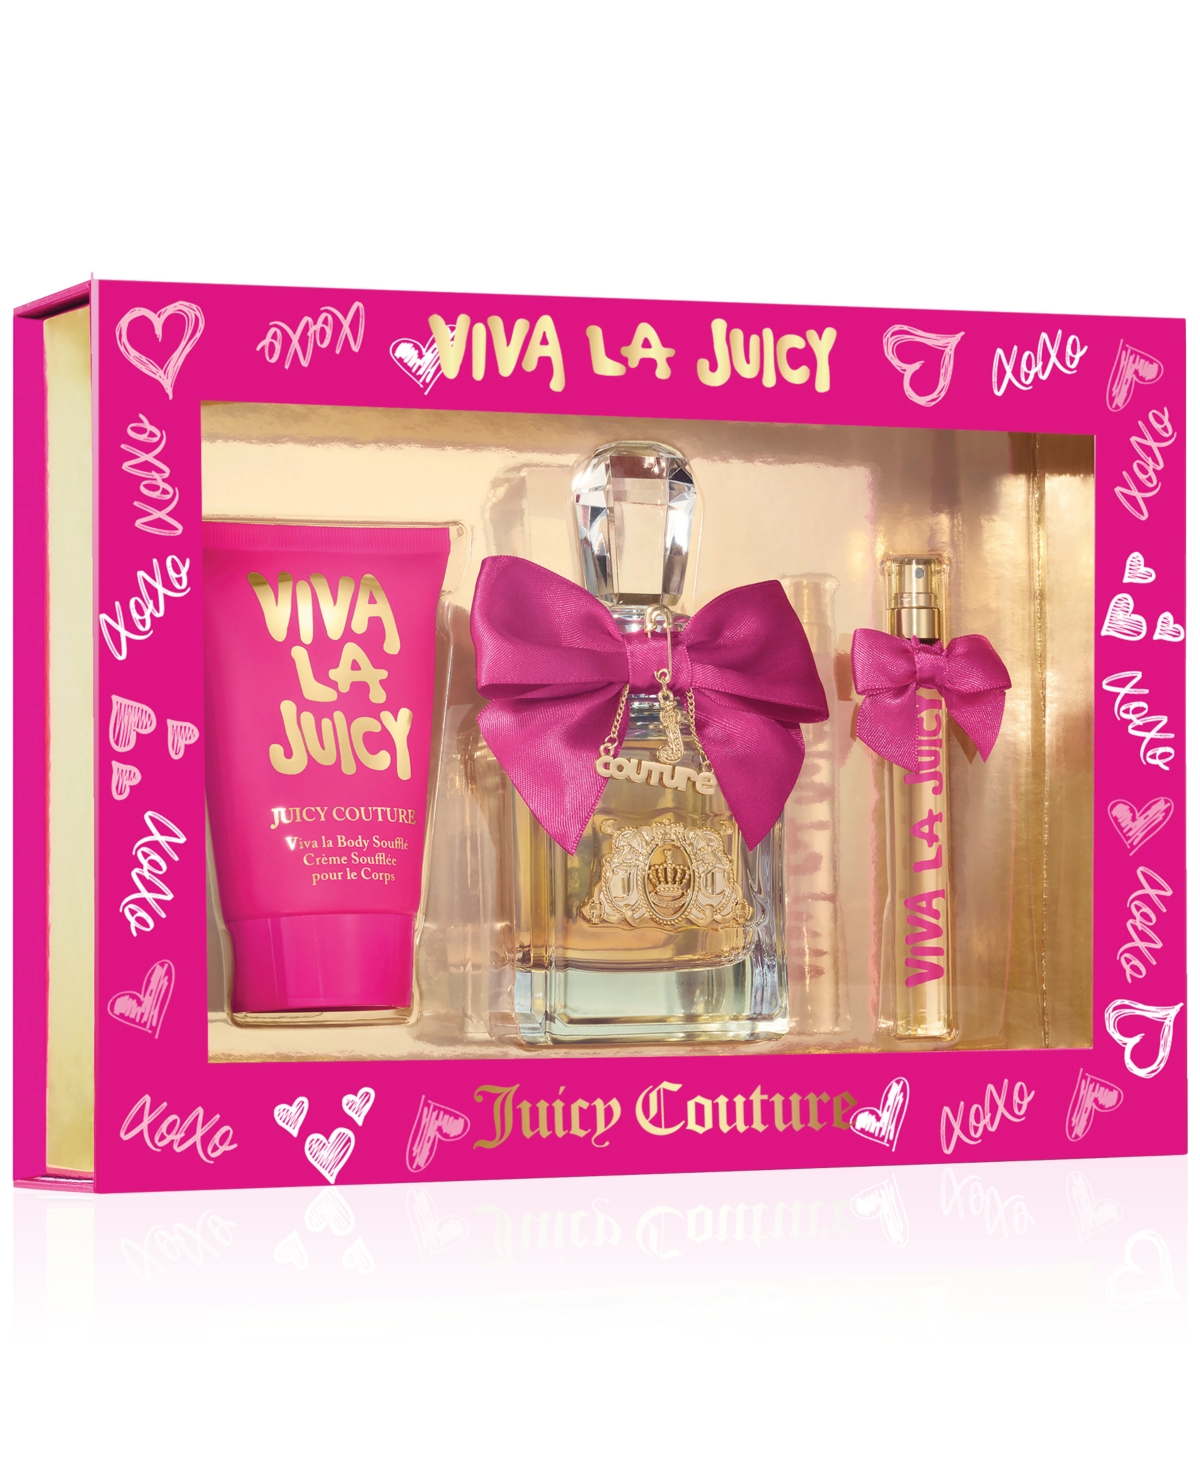 Juicy Couture 3-pc. Viva La Juicy Gift Set